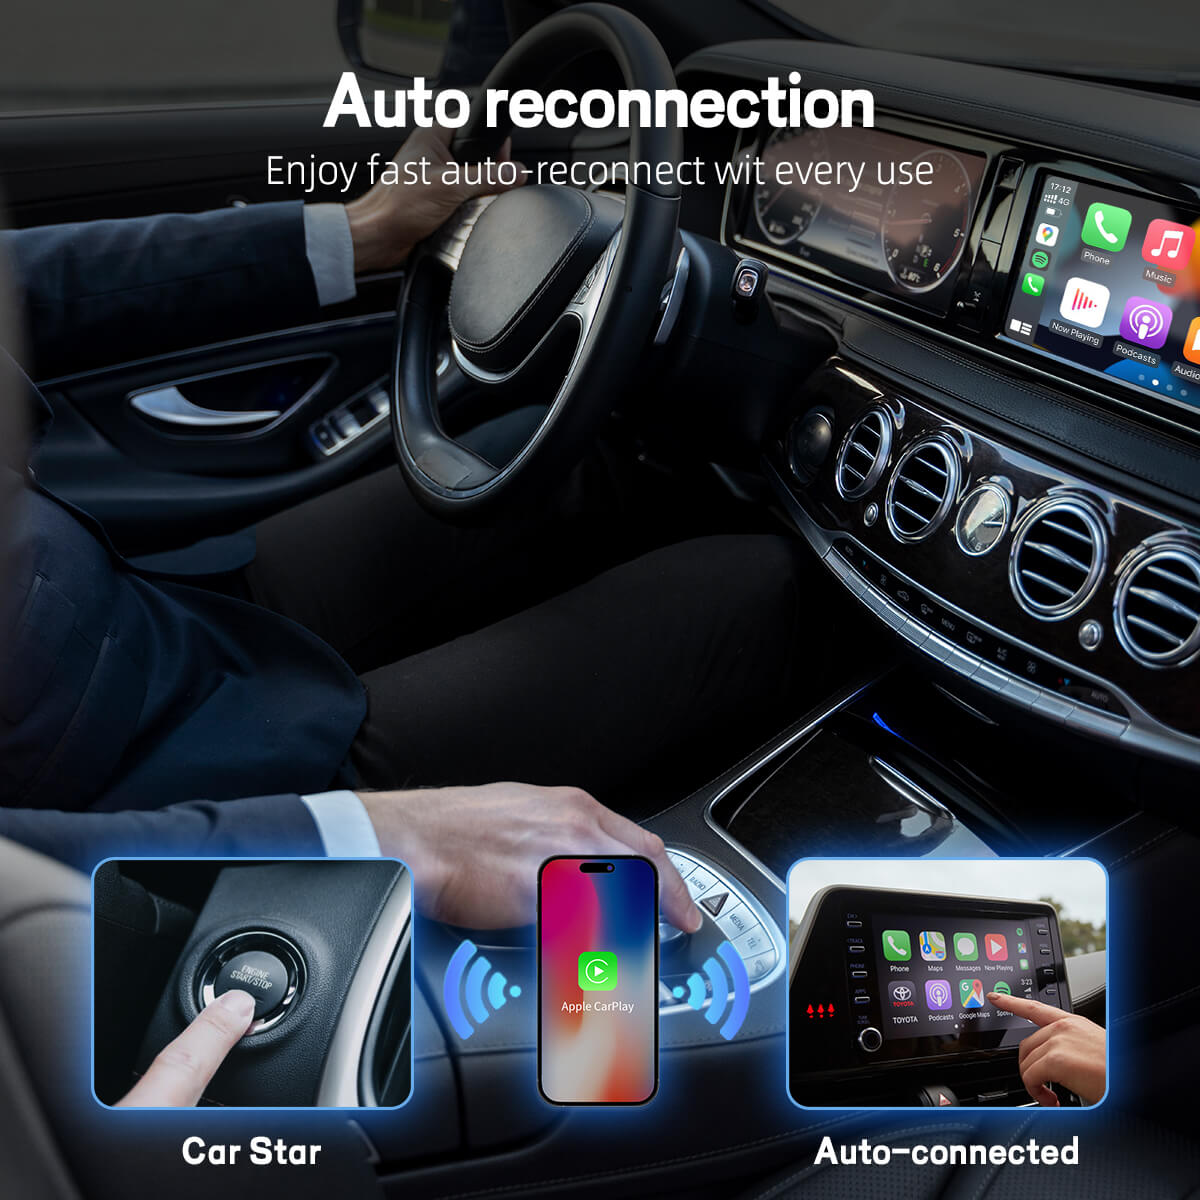 U2-AIR Pro Wireless CarPlay-Adapter